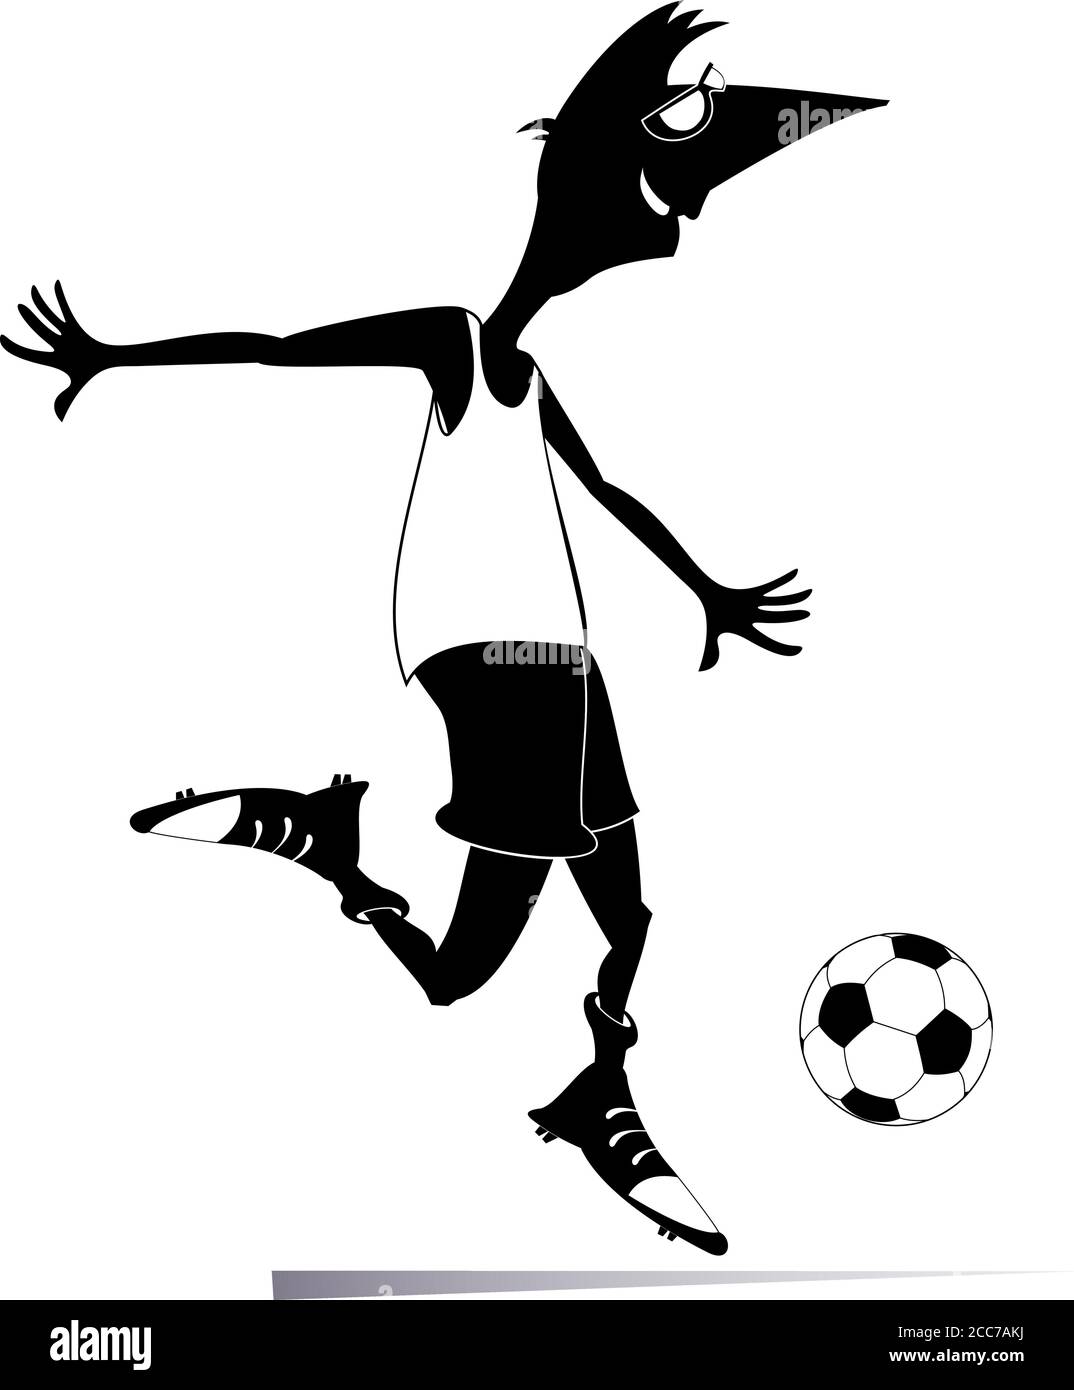 Smiling young man playing football illustration. Cartoon football player kicks a ball black on white Stock Vector